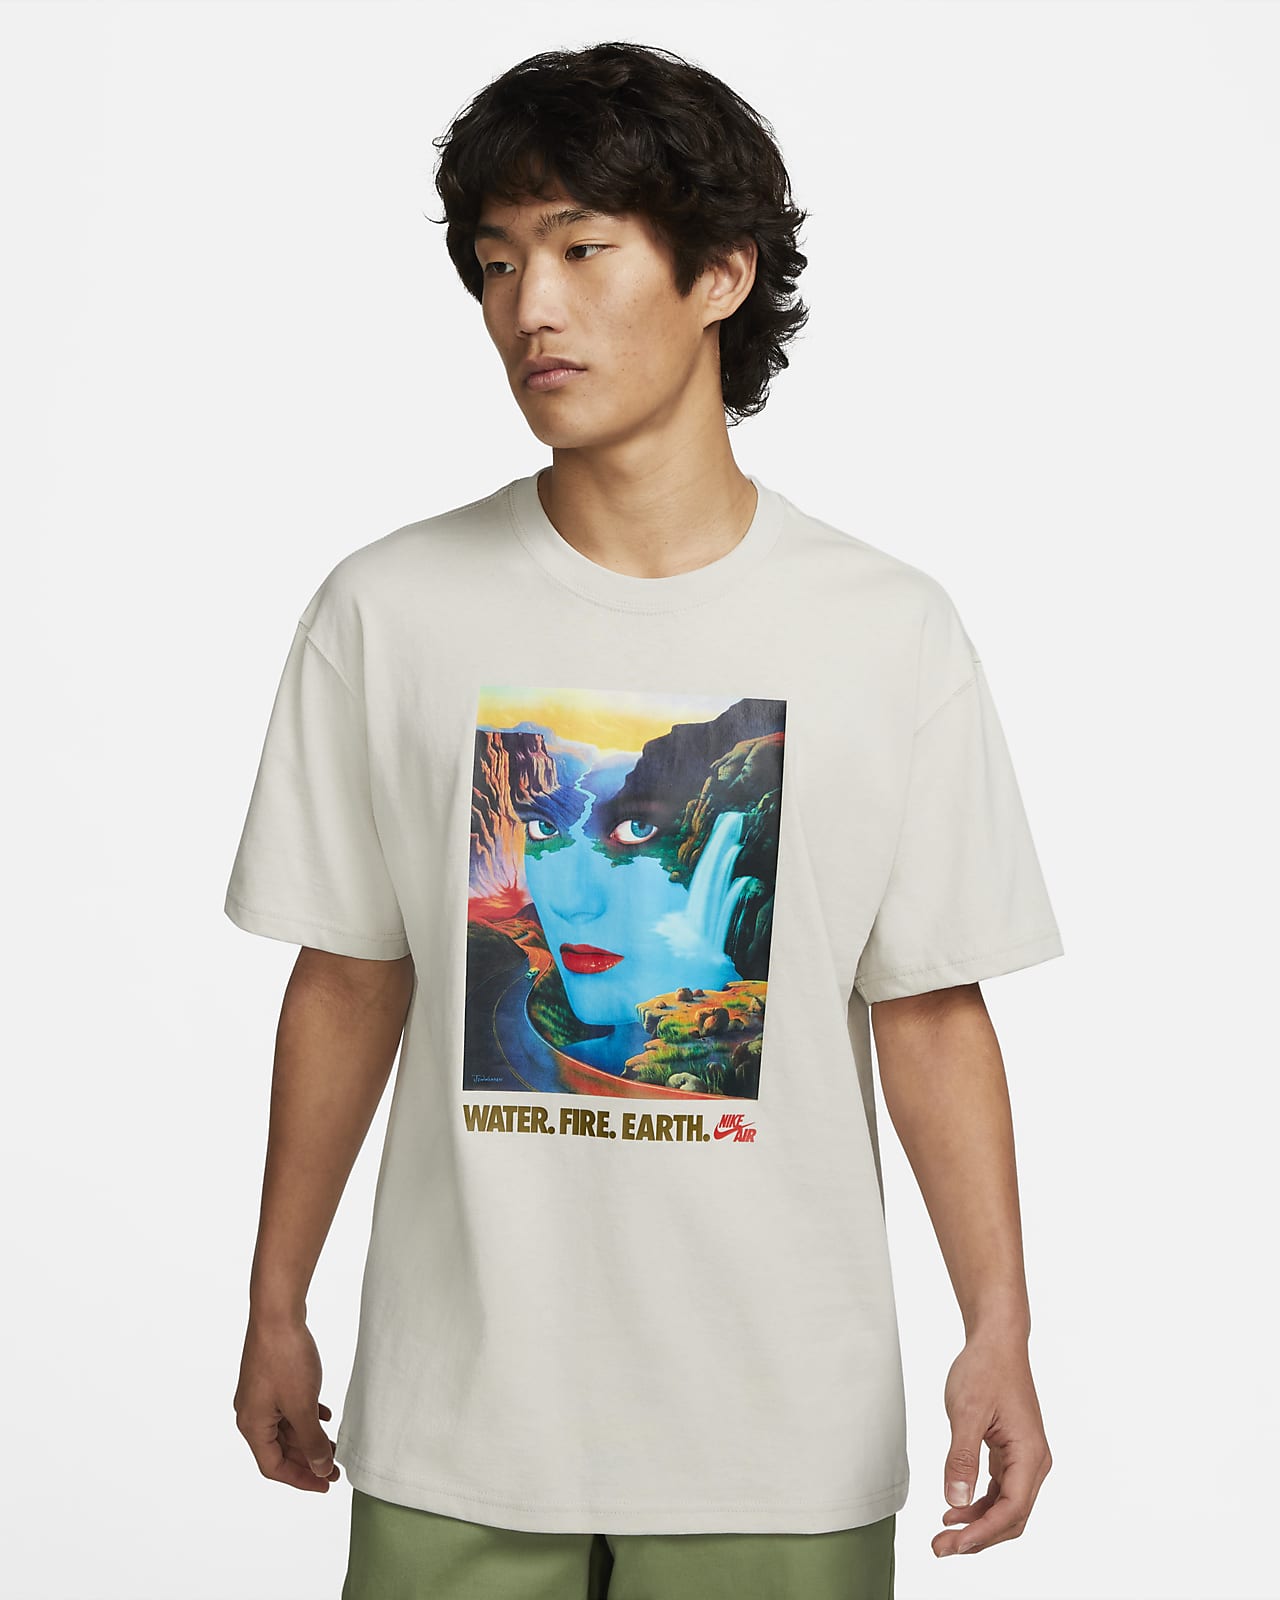 T-shirt Nike Sportswear SW Air pour Homme